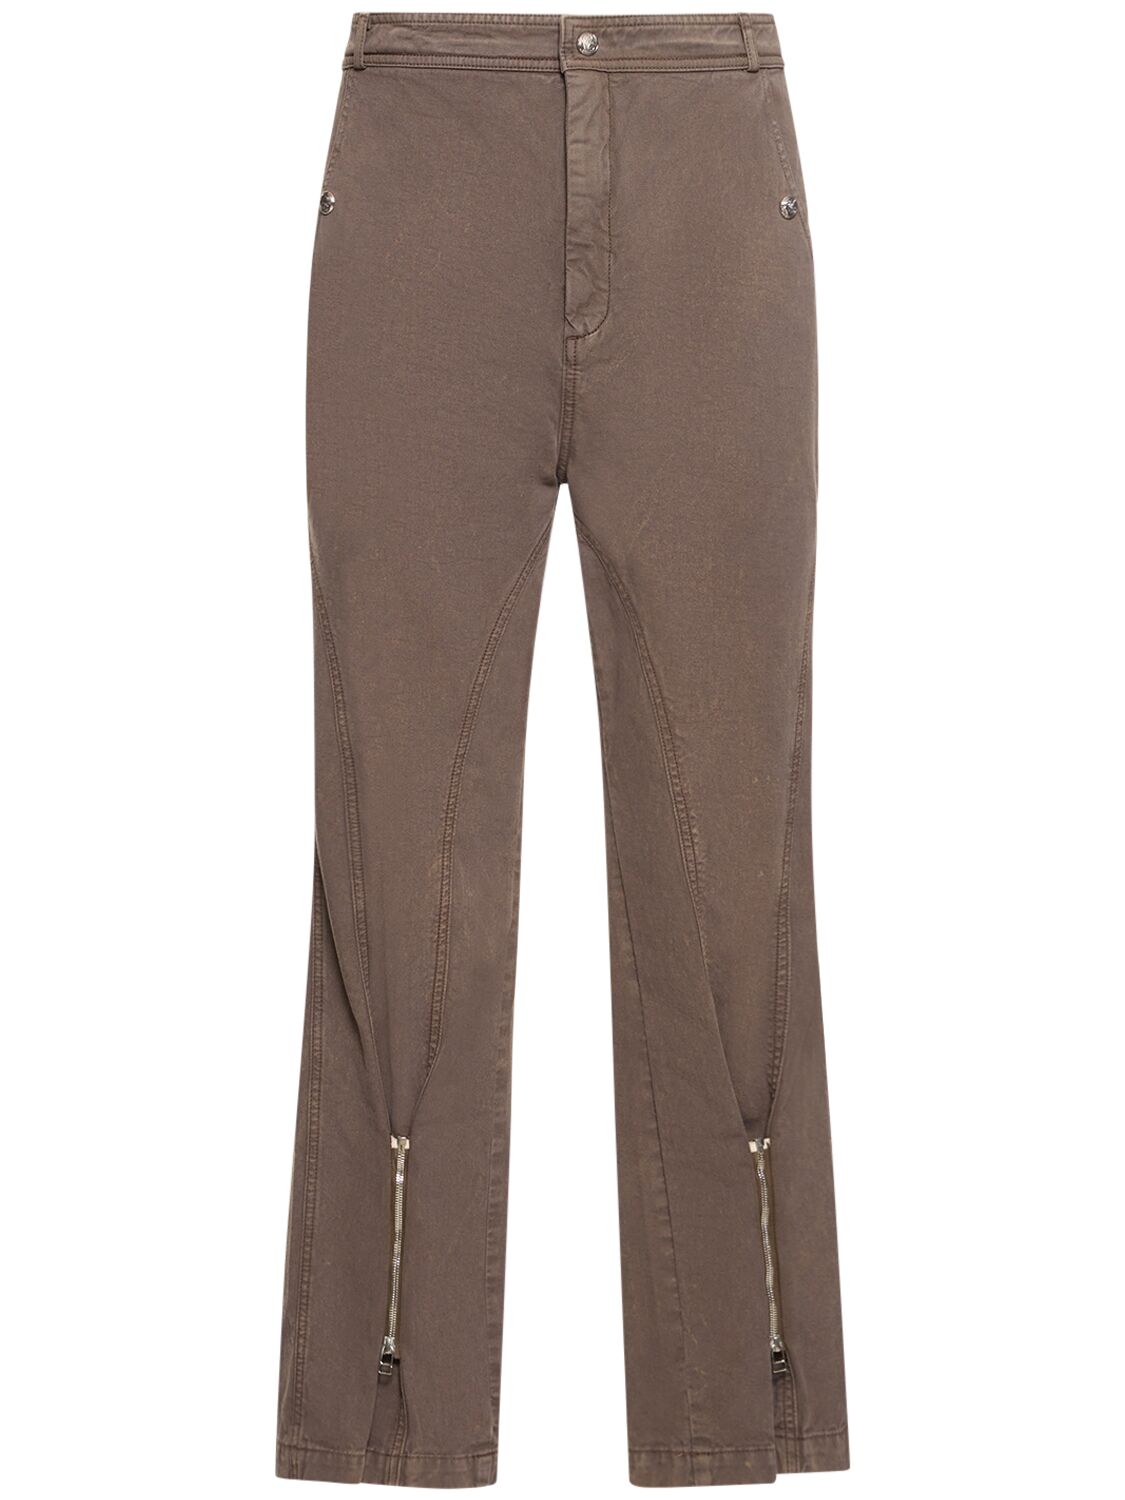 Image of Zipped Pants